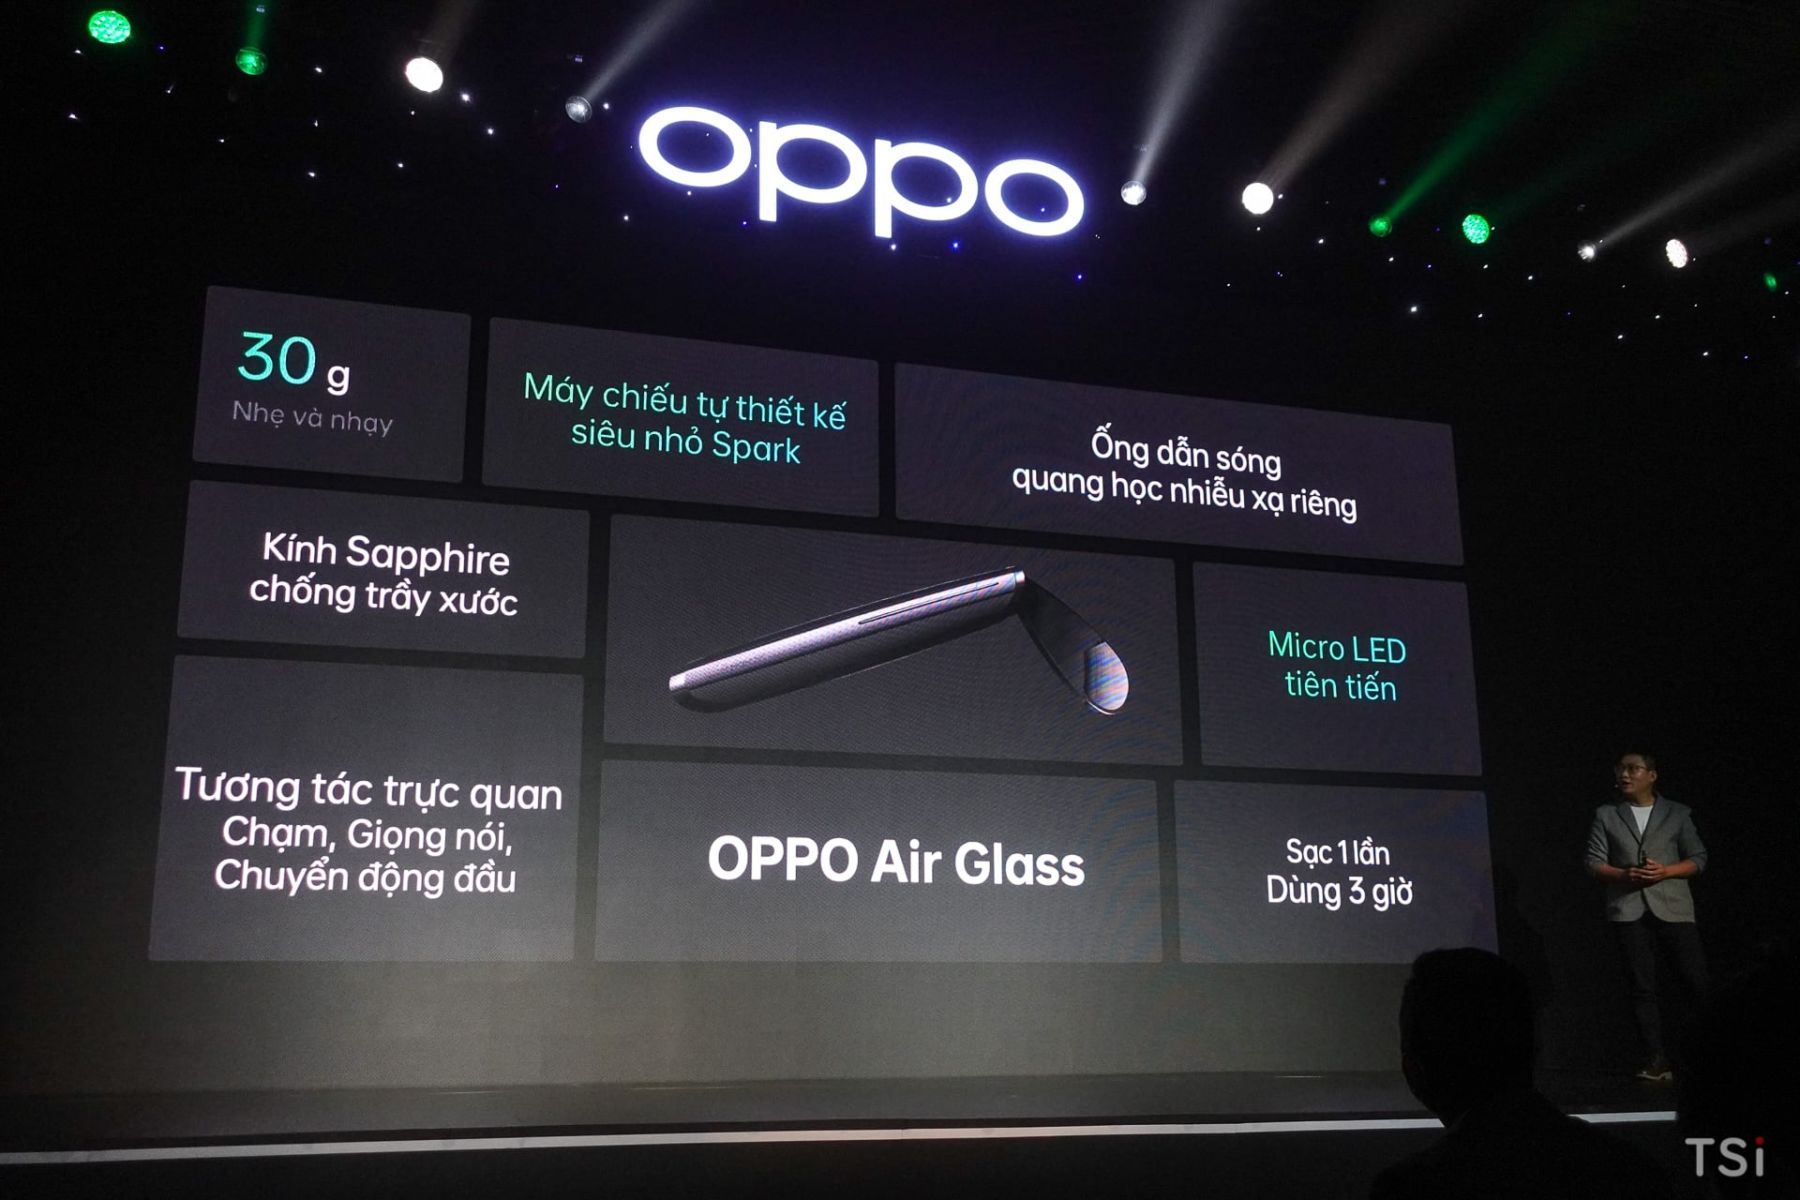 OPPO Air Glass